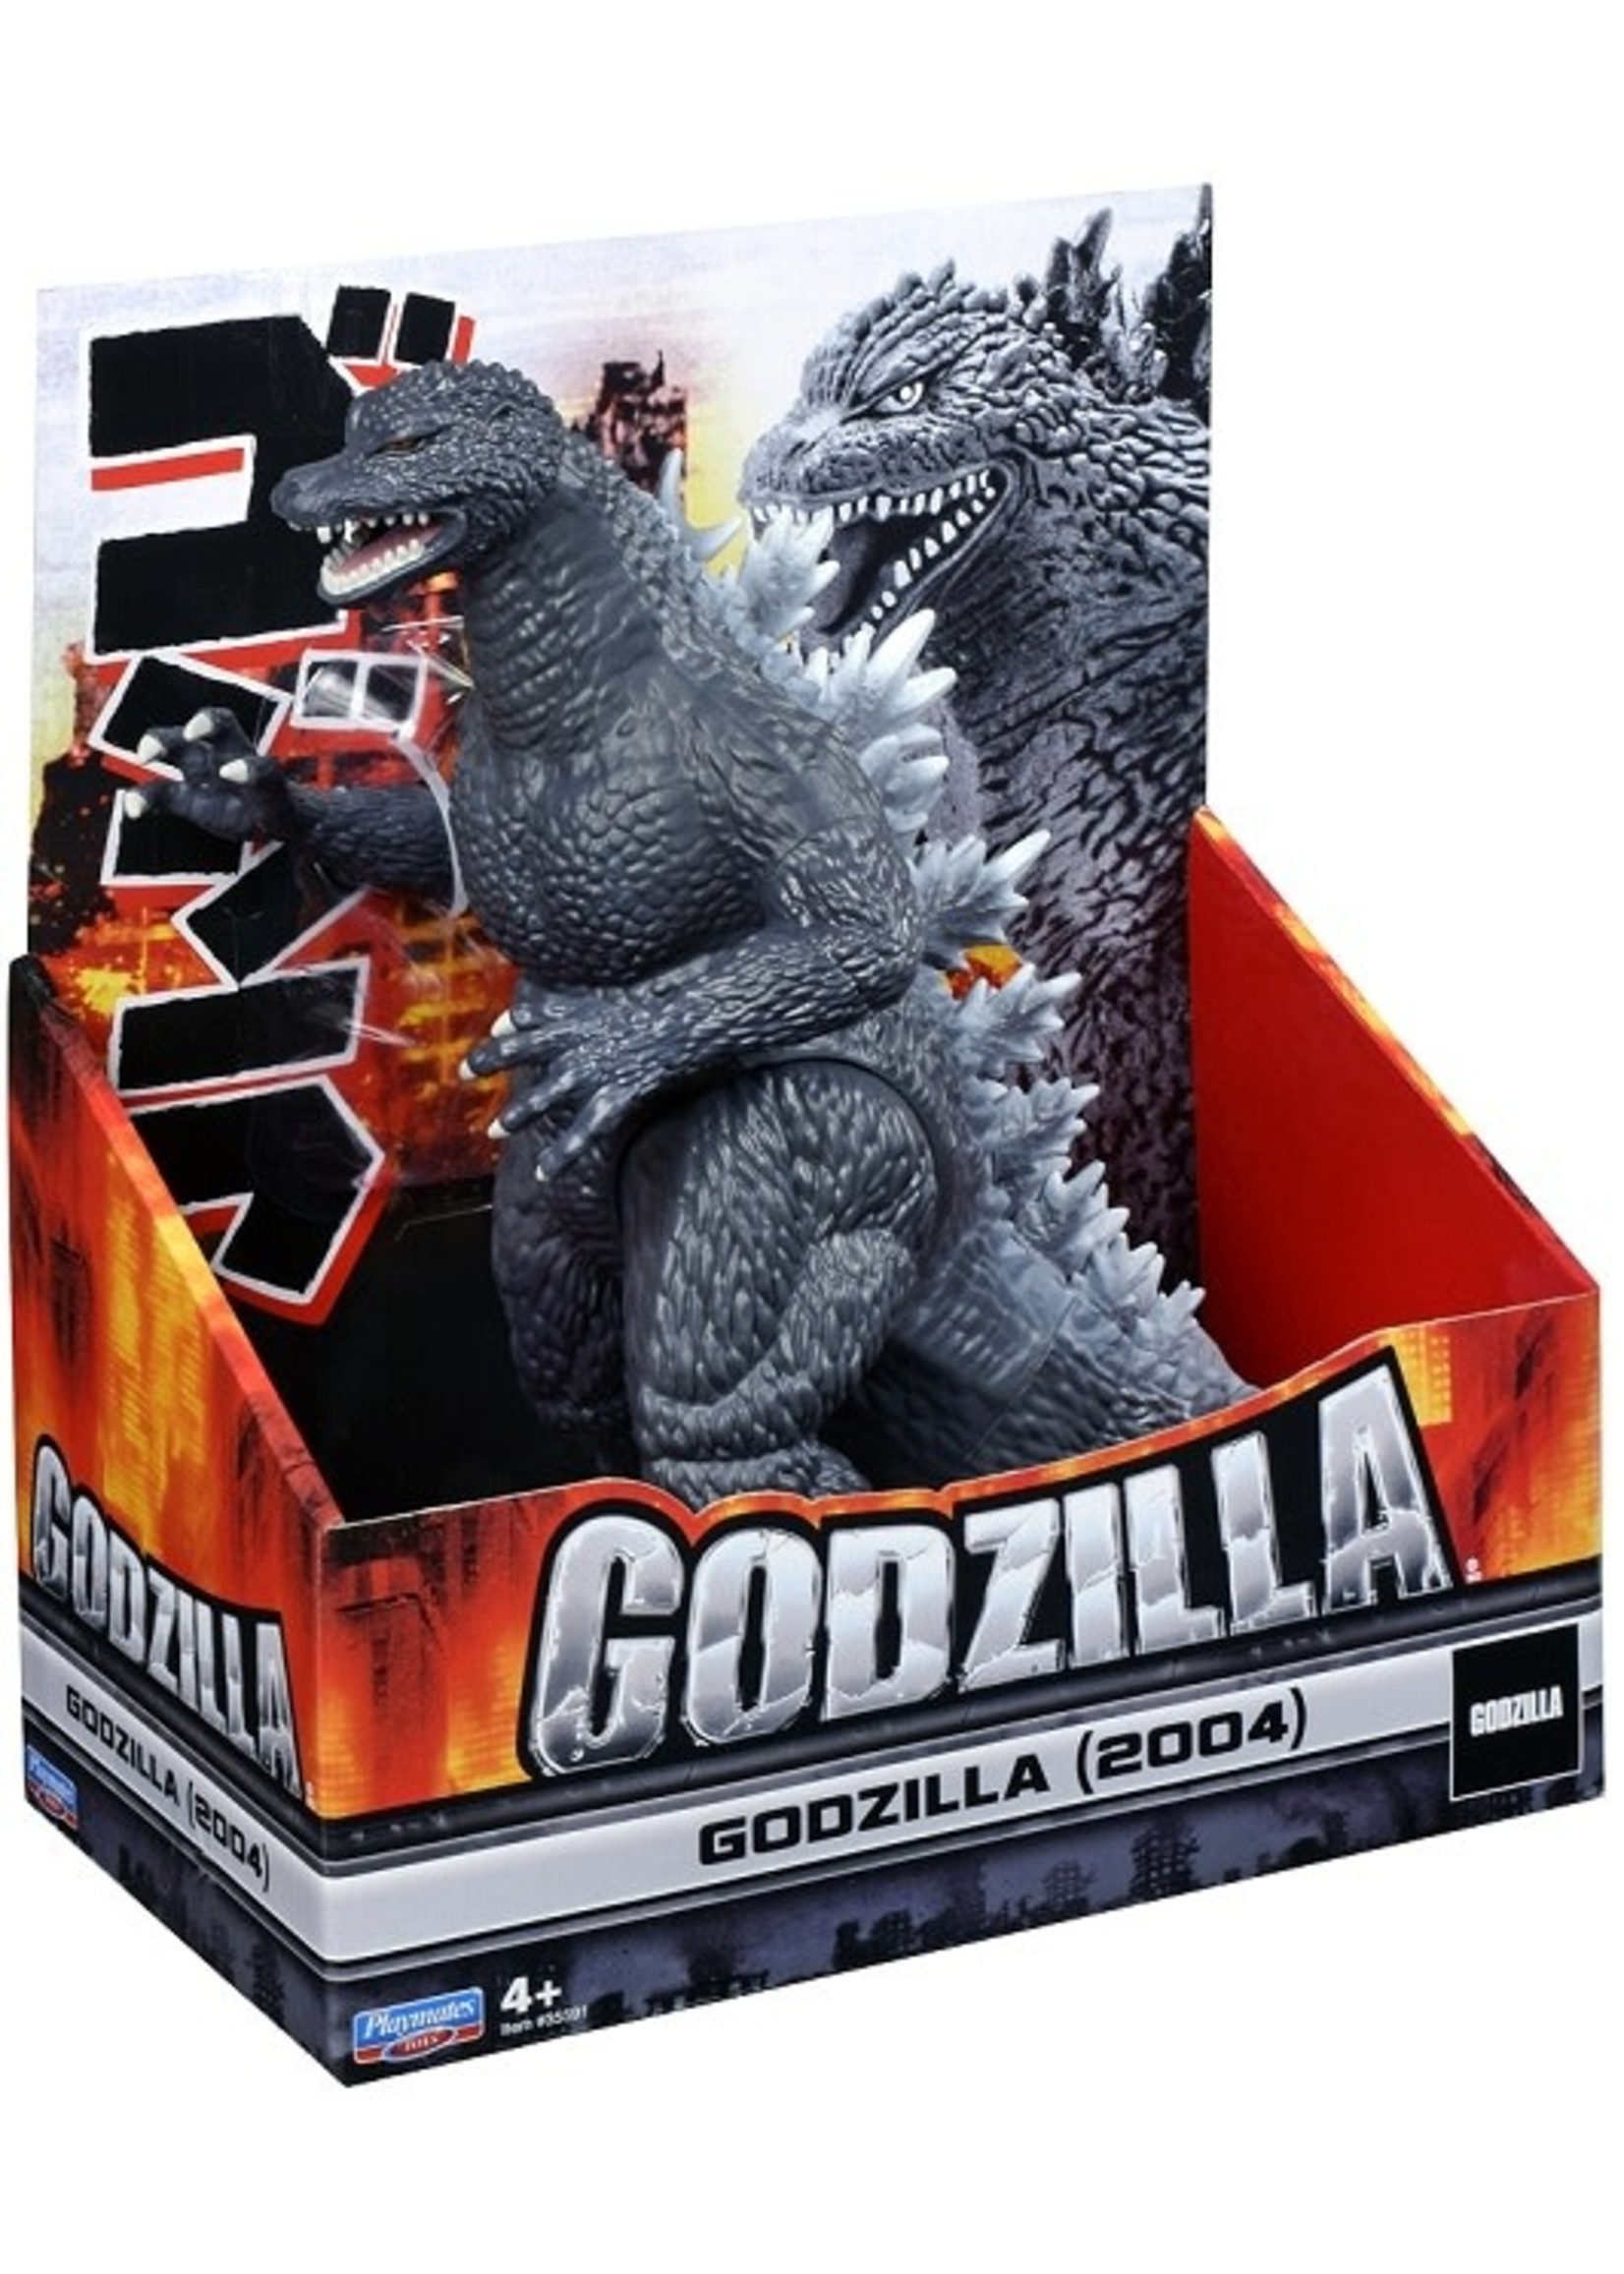 playmates toys Giant Godzilla (2004)